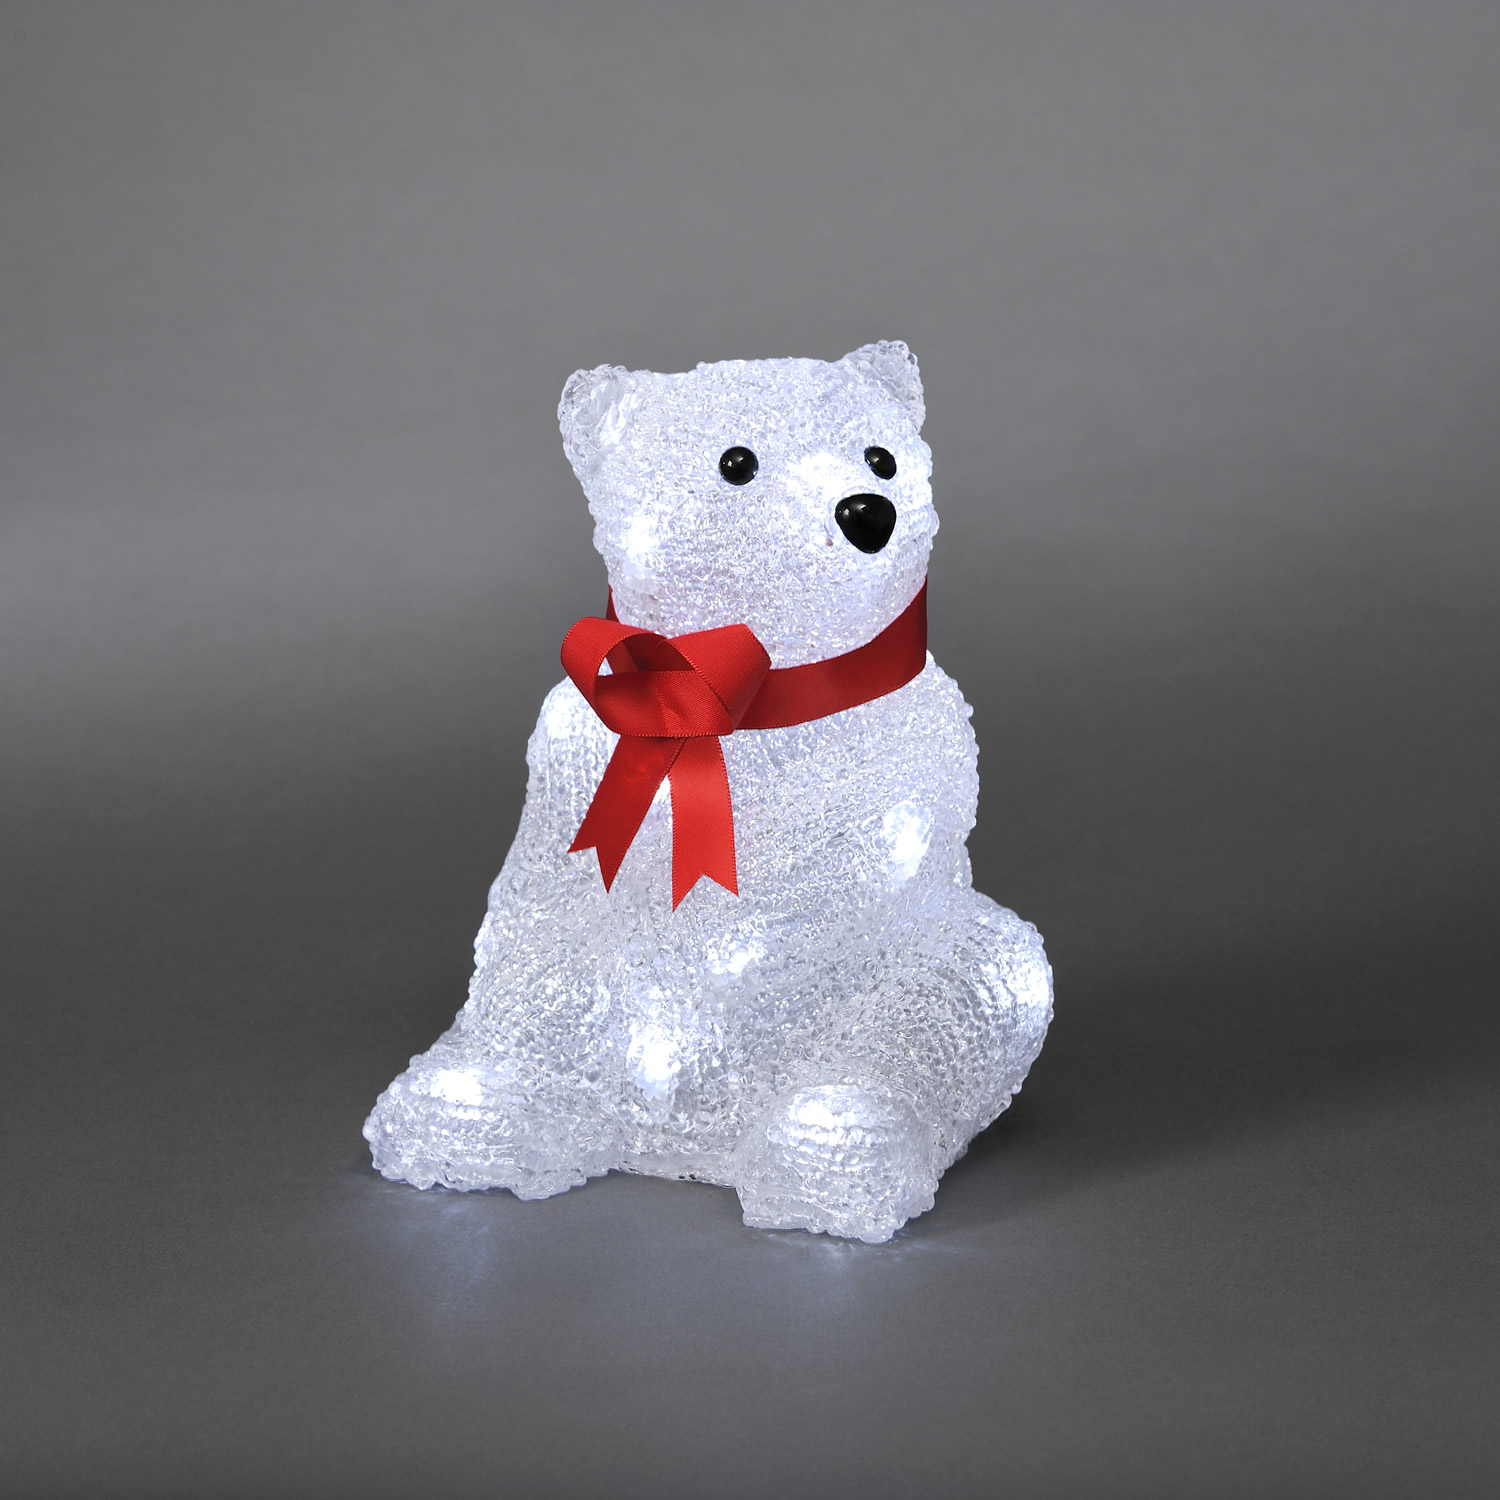 LED ALED Acryl polar bear, sitting with red ribbon